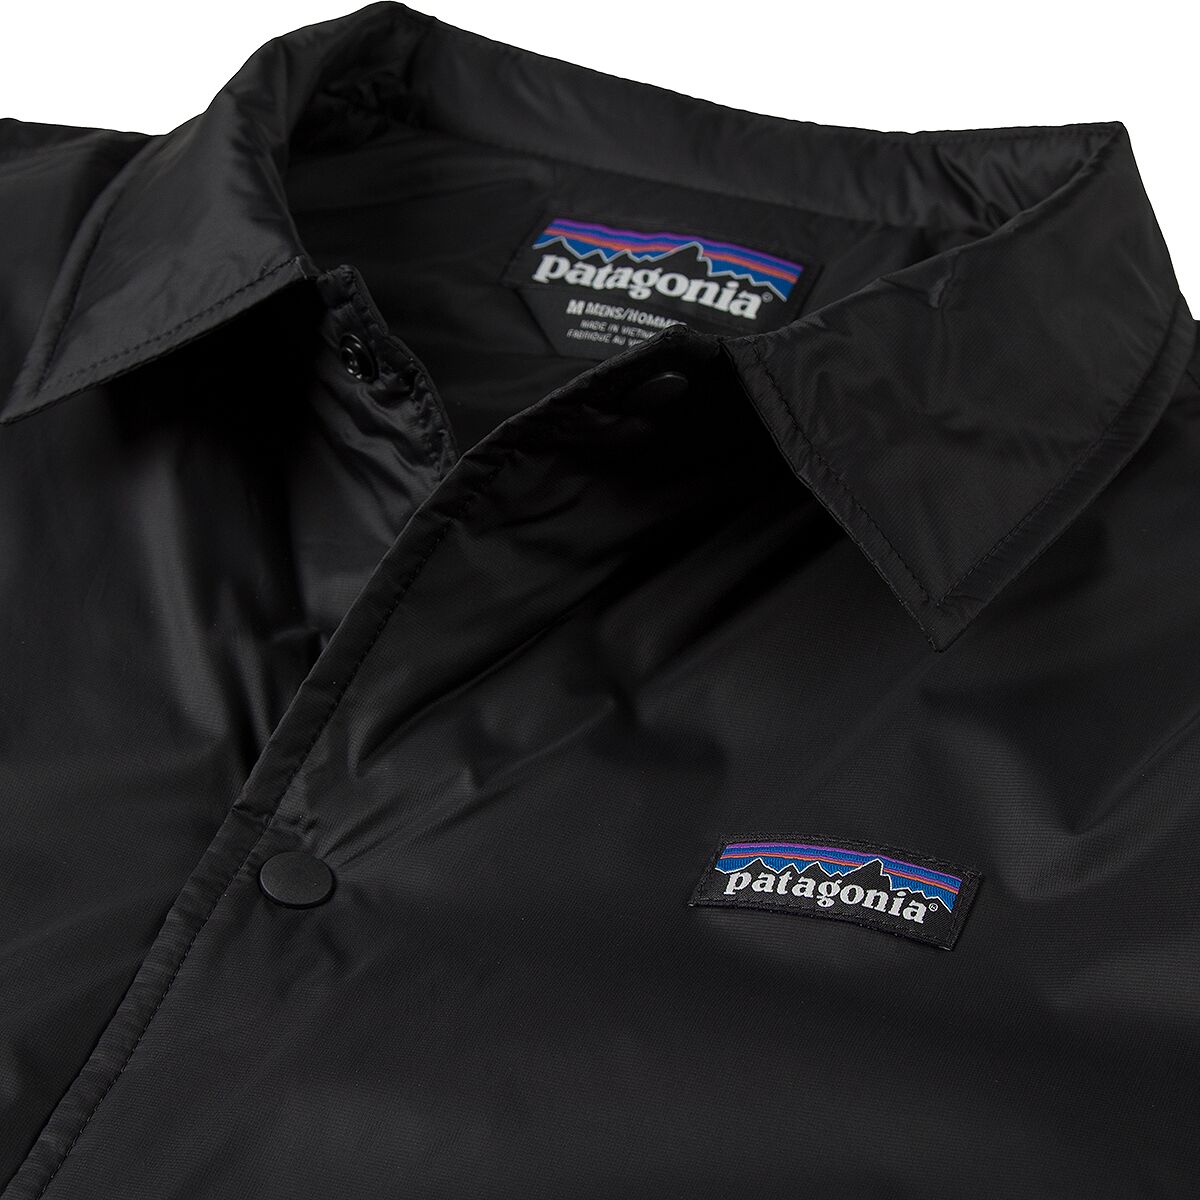 Patagonia Mojave Trails Coaches Jacket - Men's - Clothing